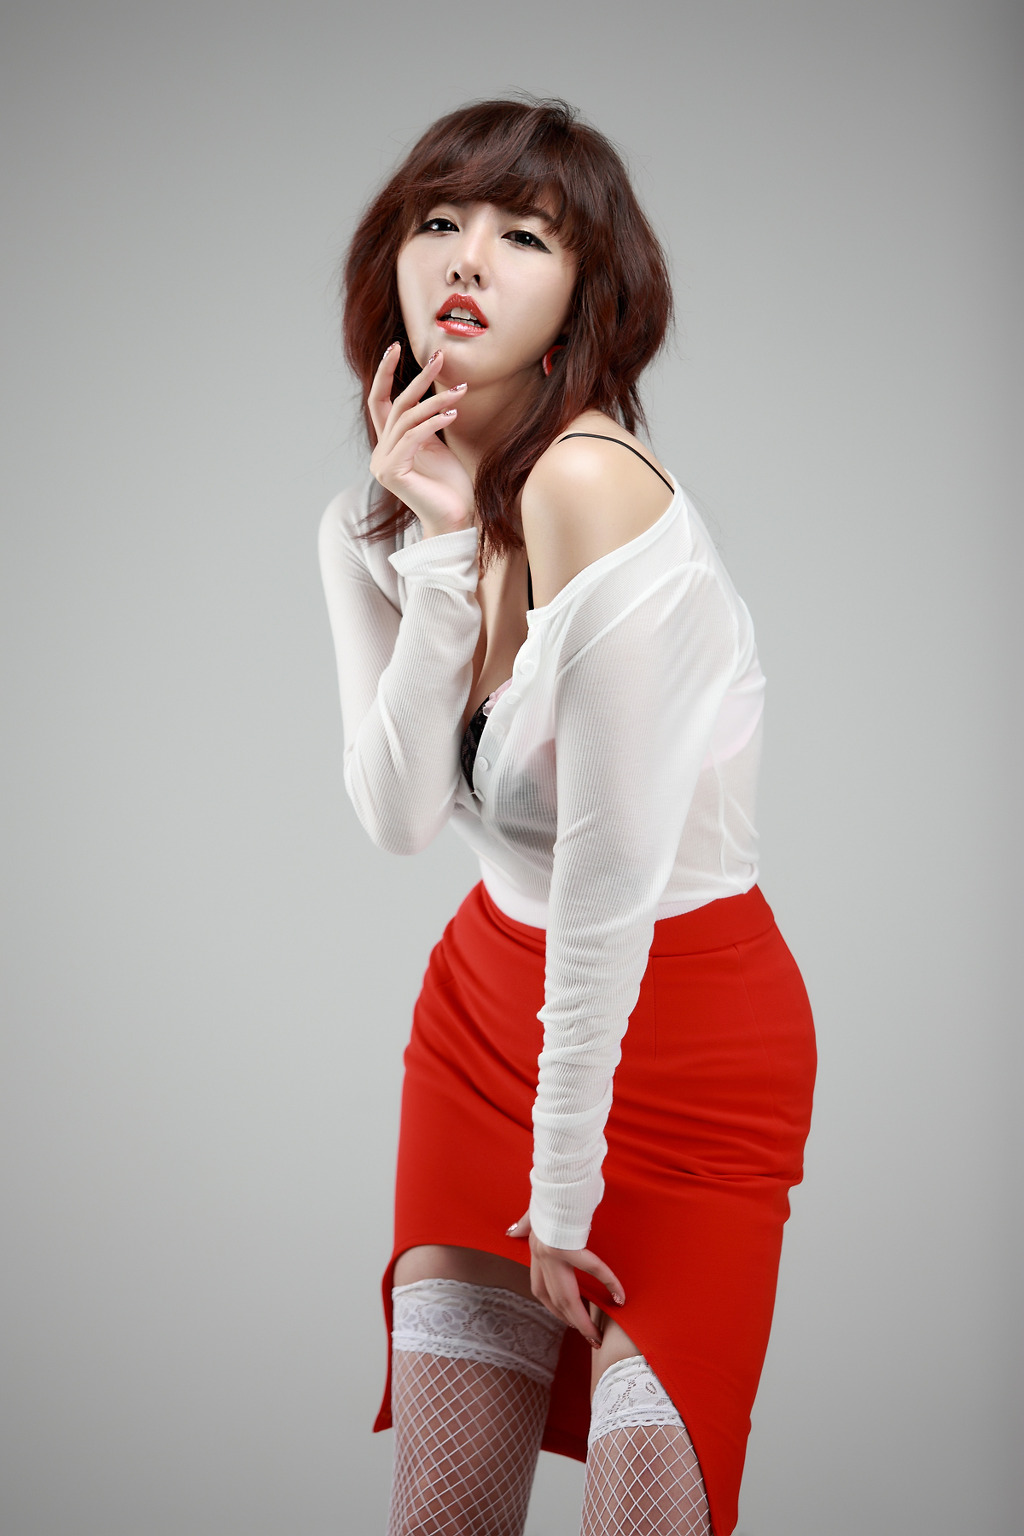 Xxx nude girls: Sexy Red - Jung Yu Ri